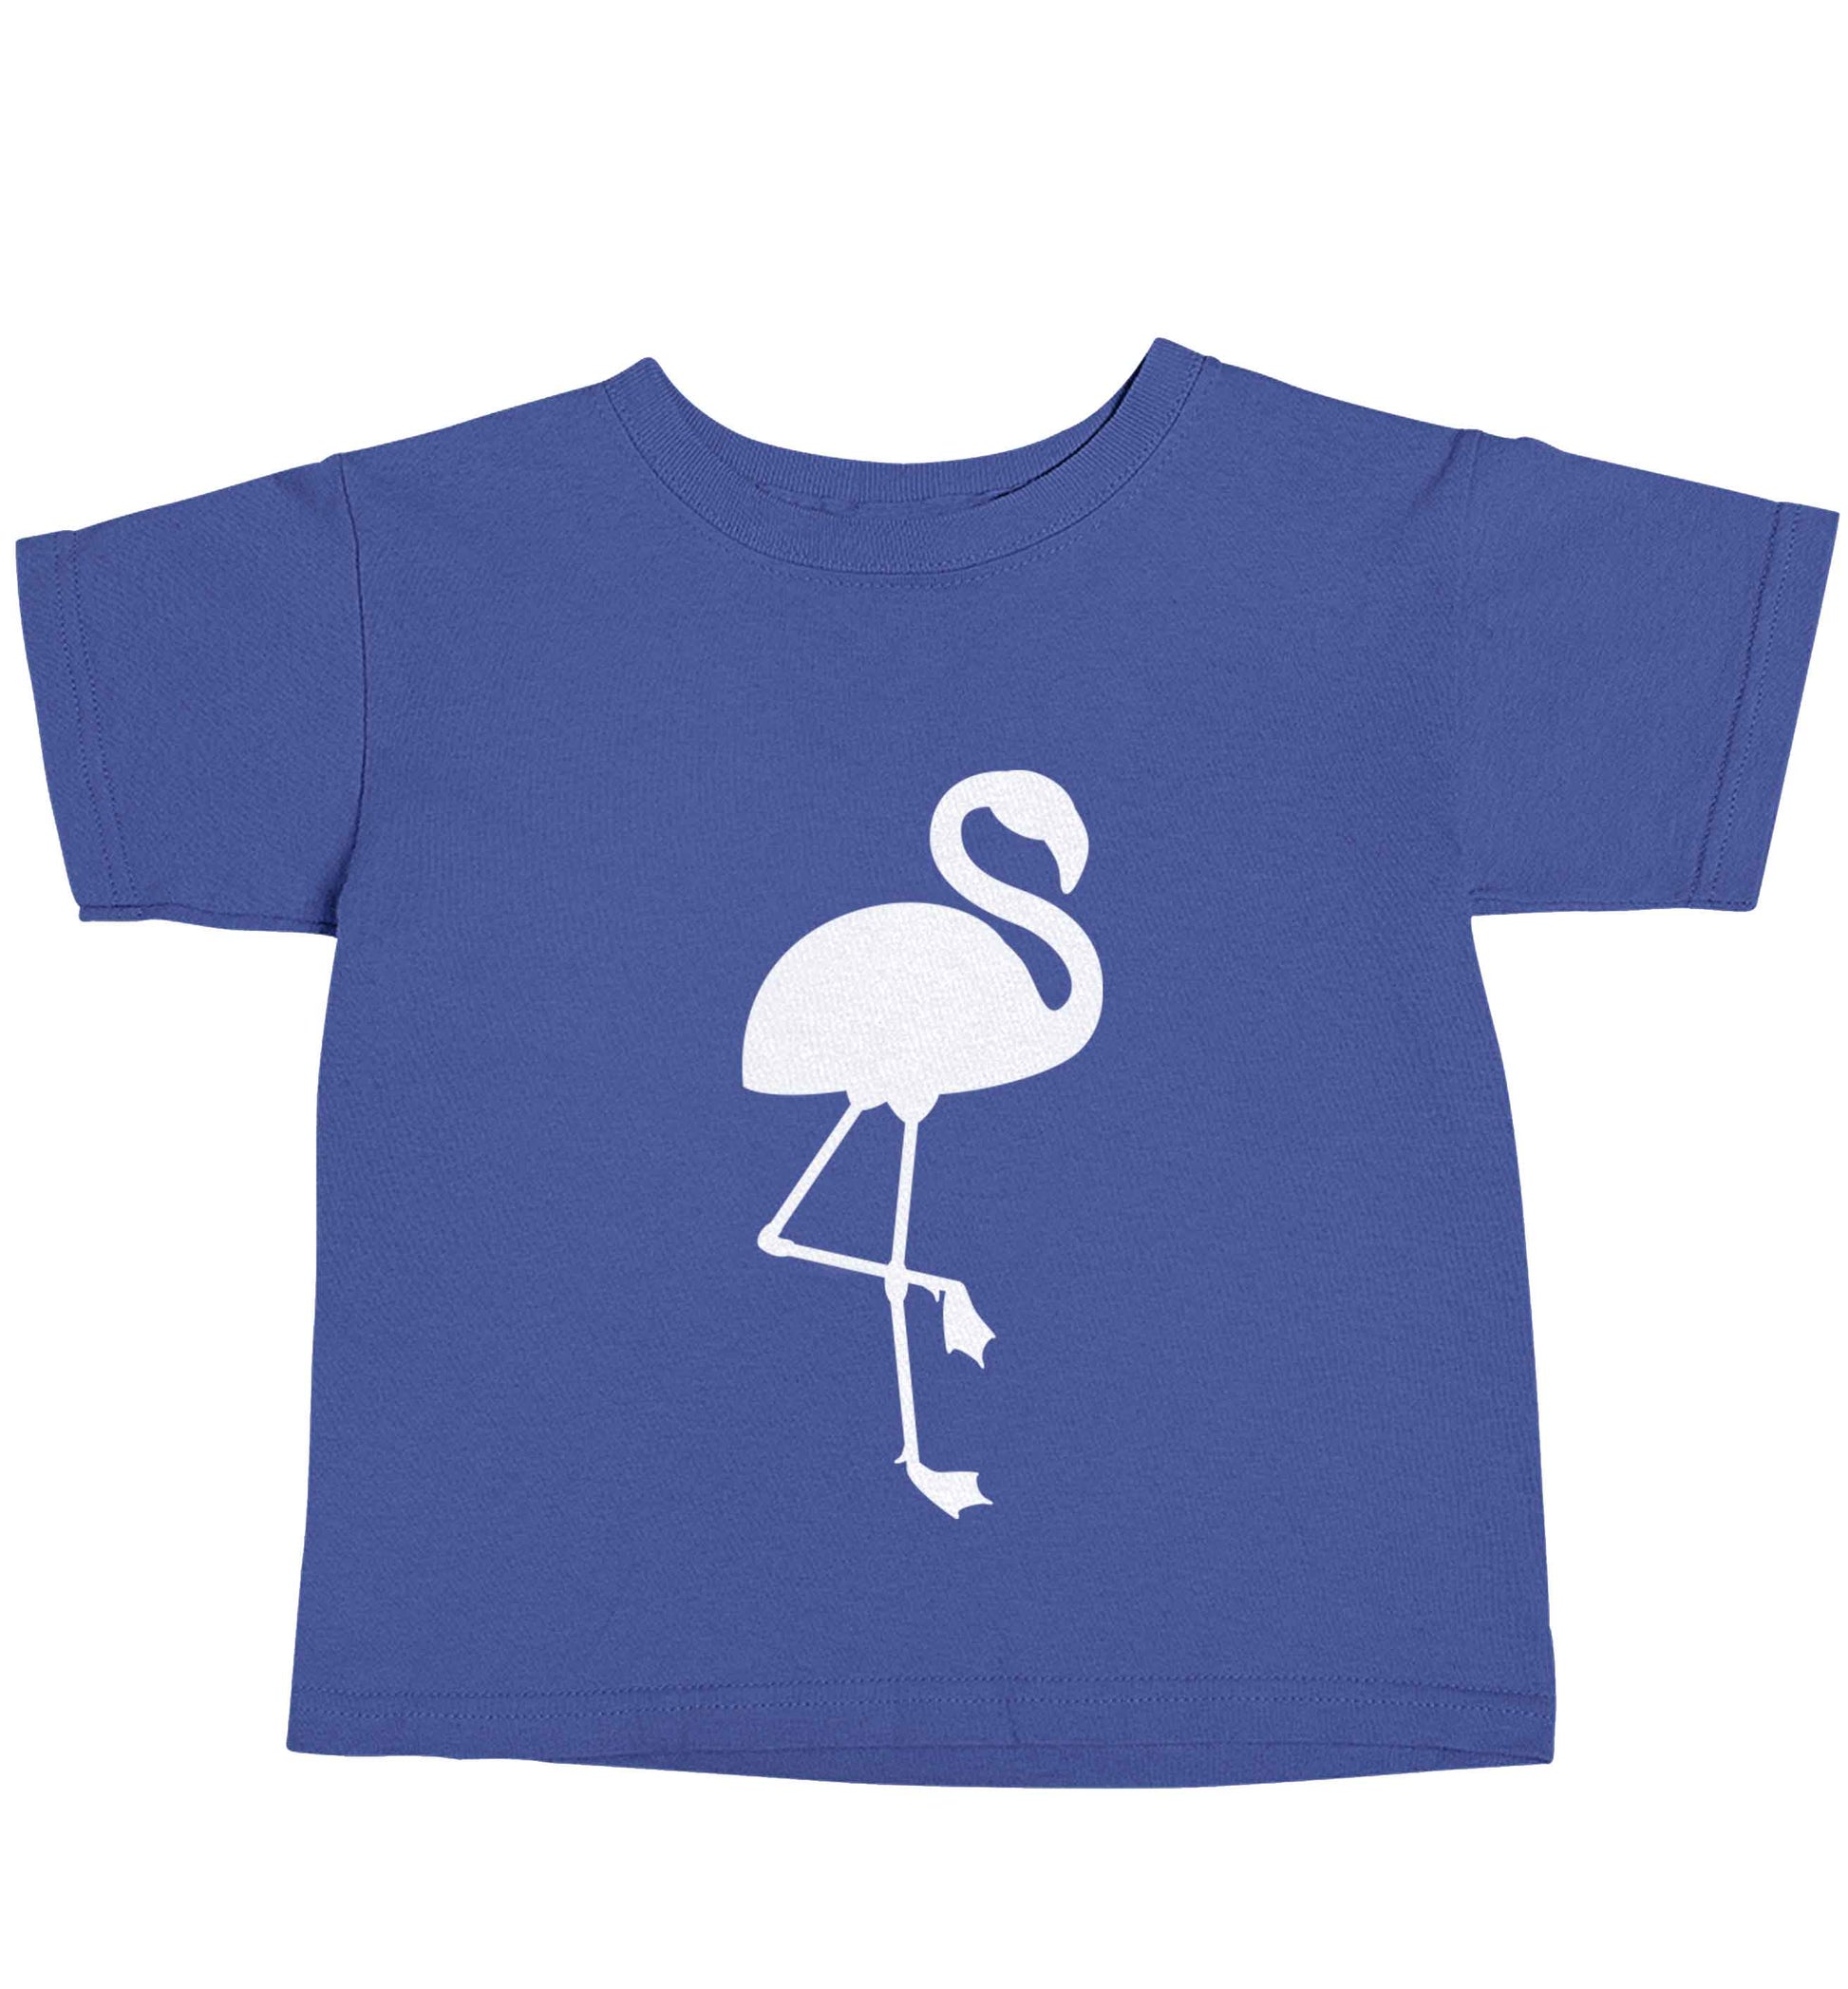 Pink flamingo blue baby toddler Tshirt 2 Years